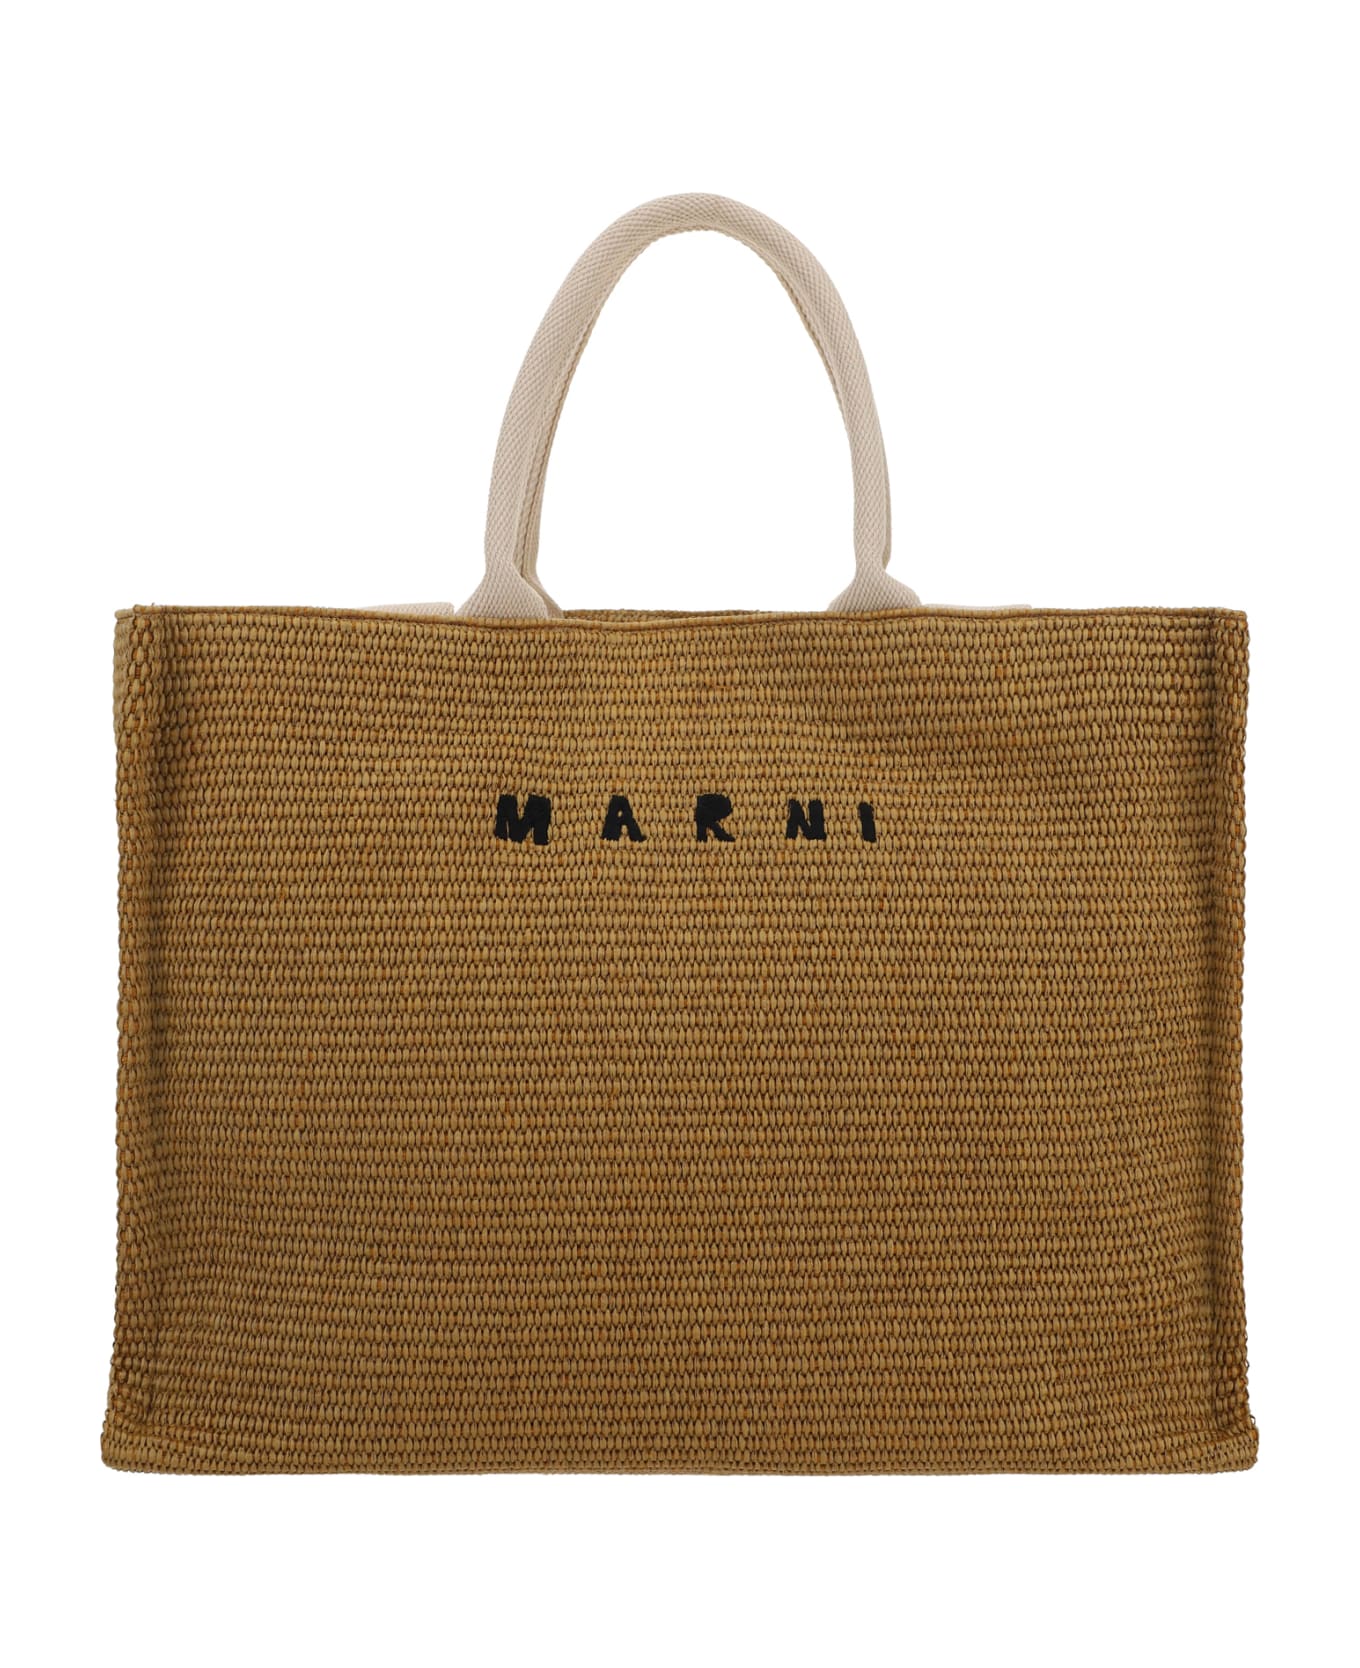 Marni Tote Handbag - Brown